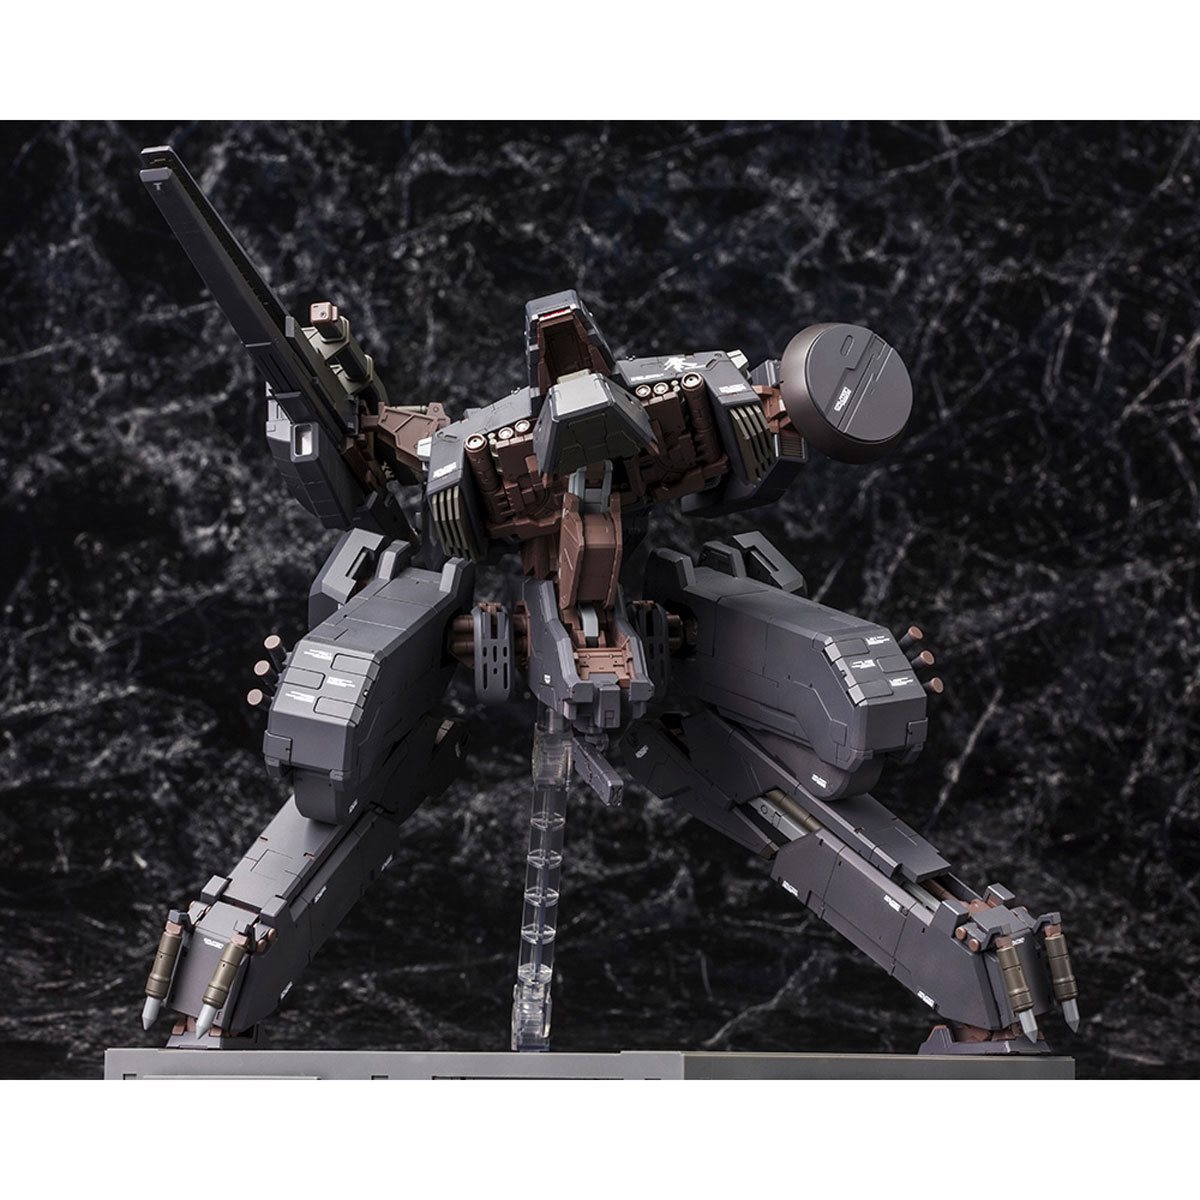 Kotobukiya Metal Gear Solid: Metal Gear Rex Model Kit (Black Version)  [Japan Import]